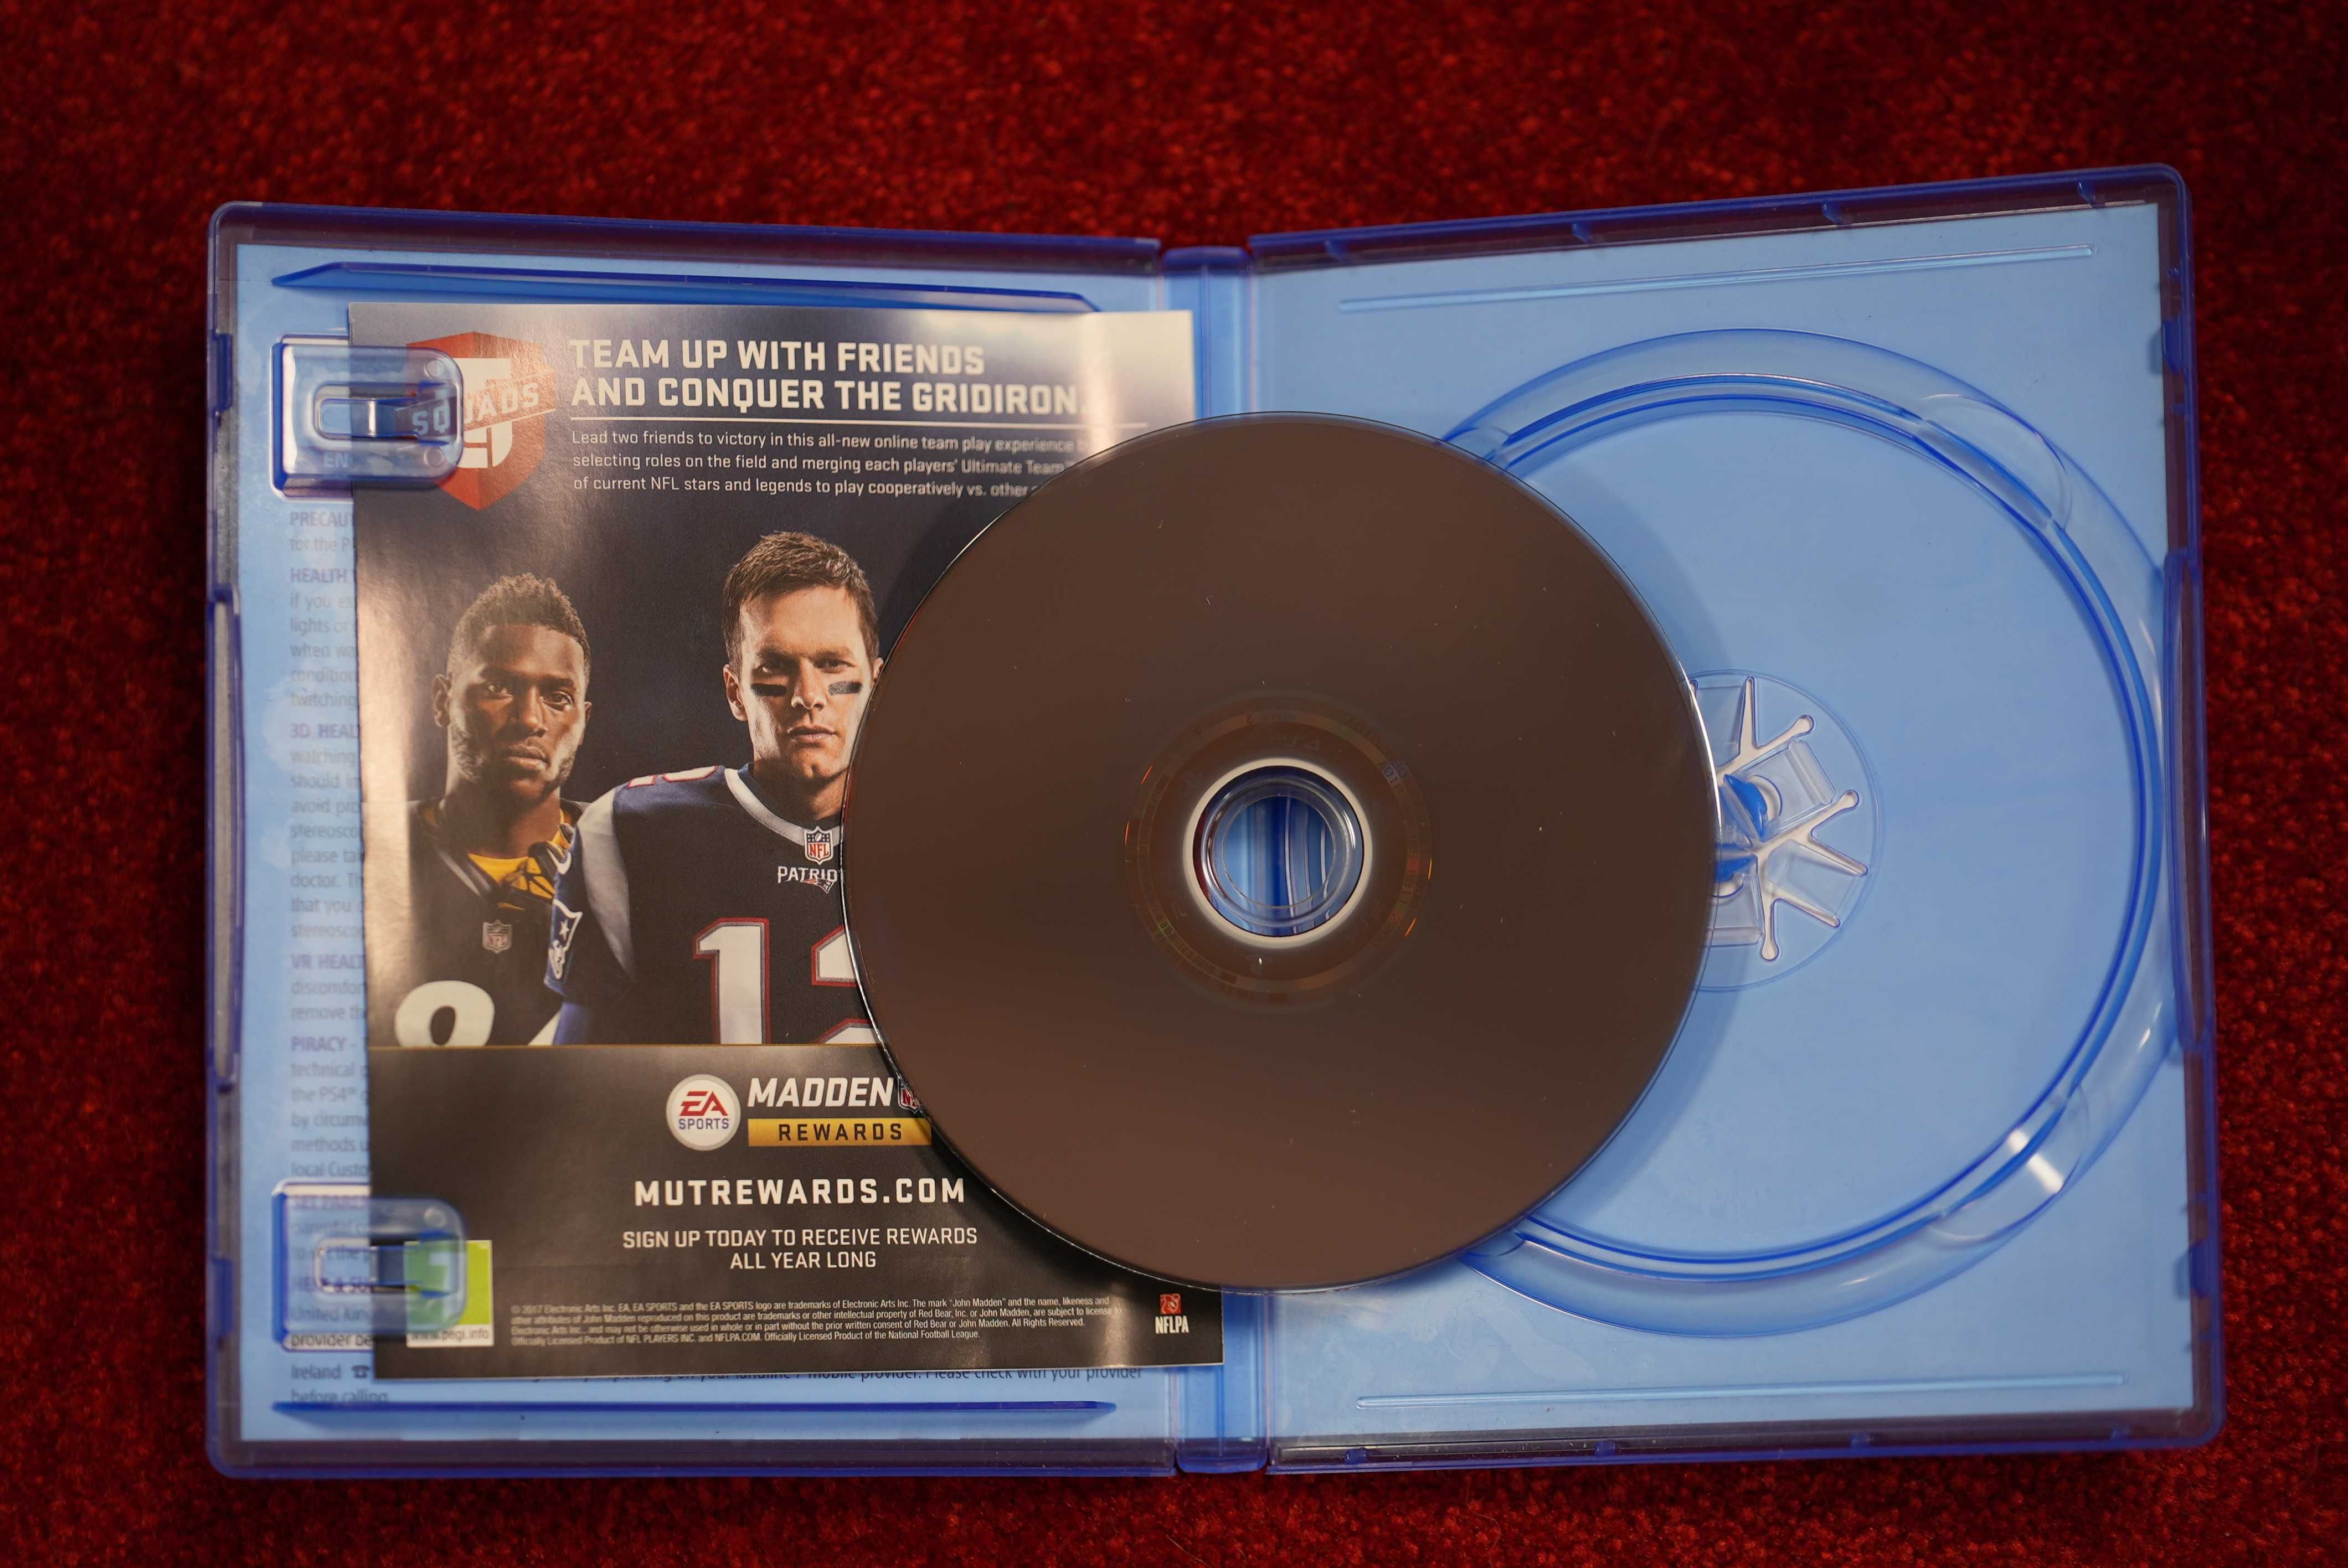 Madden NFL 18 gra na PS4 Gry PlayStation rugby futbol amerykański